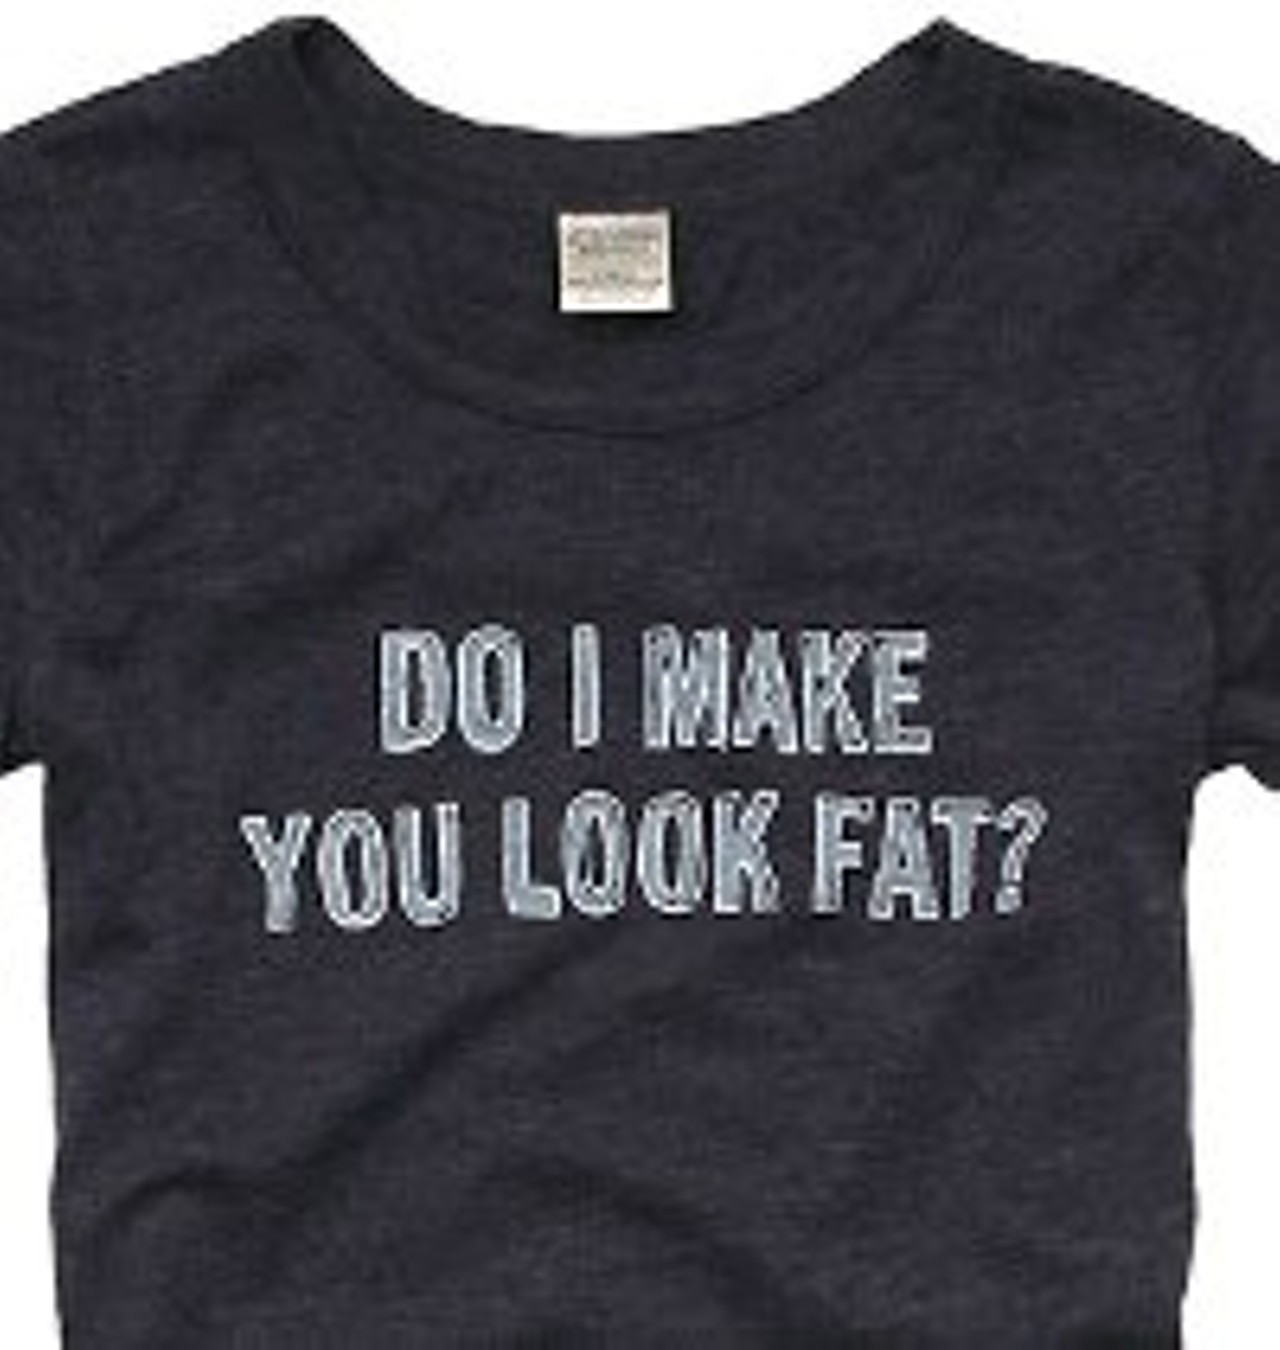 funny a&f t-shirts